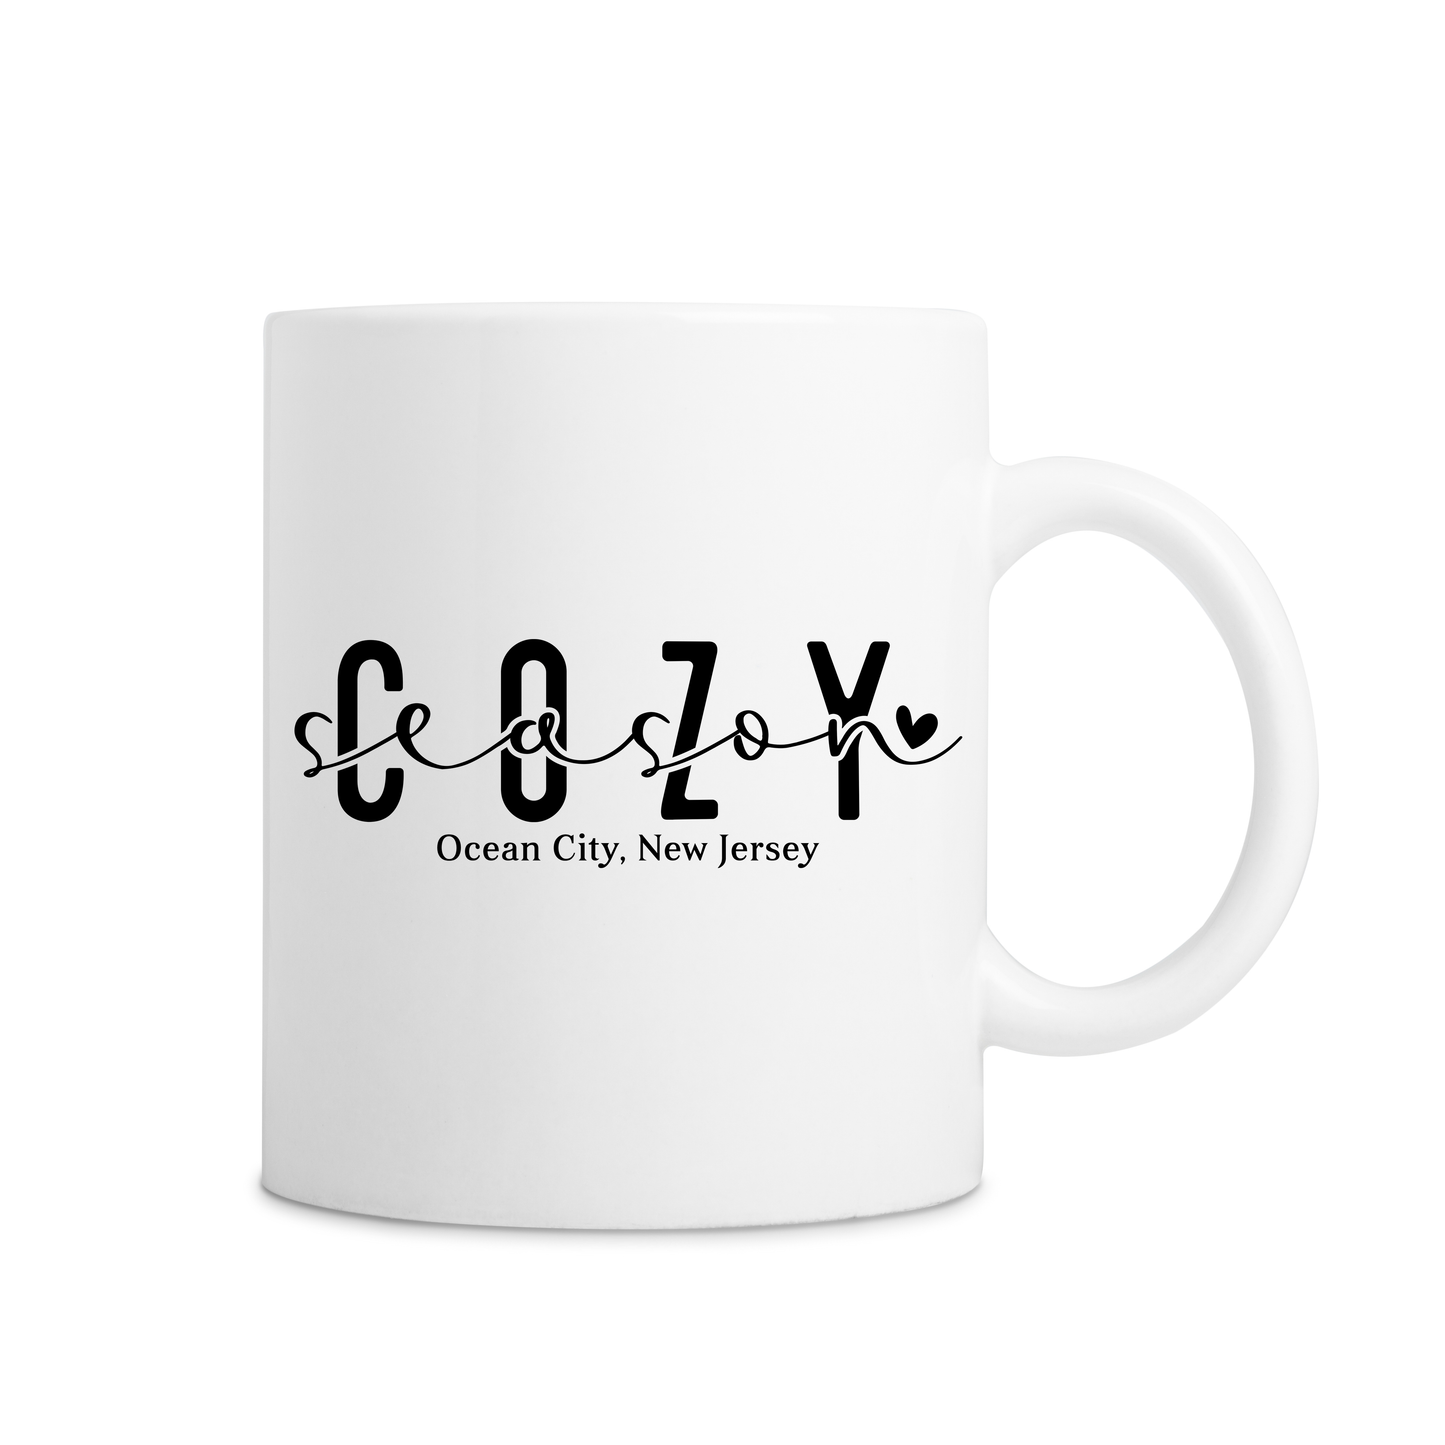 Ocean City Cozy Season Mug - White